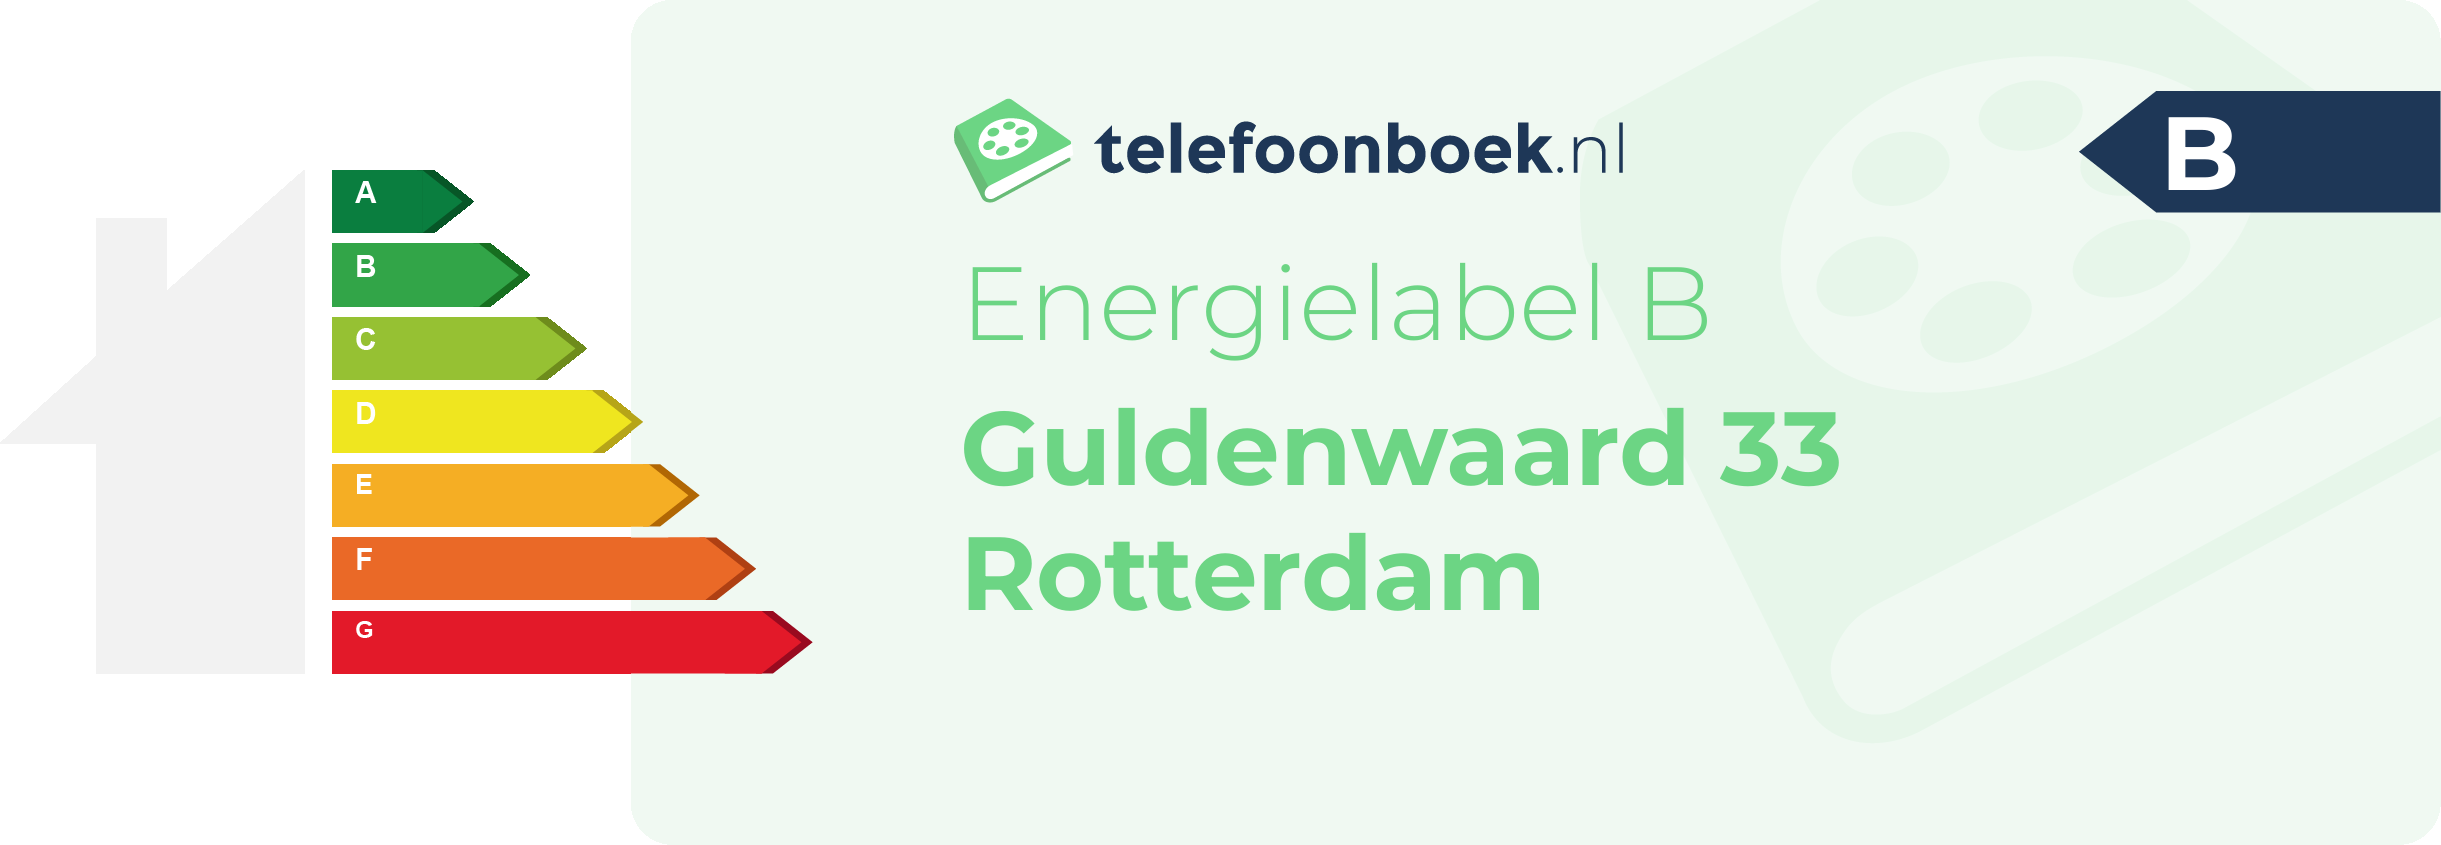 Energielabel Guldenwaard 33 Rotterdam